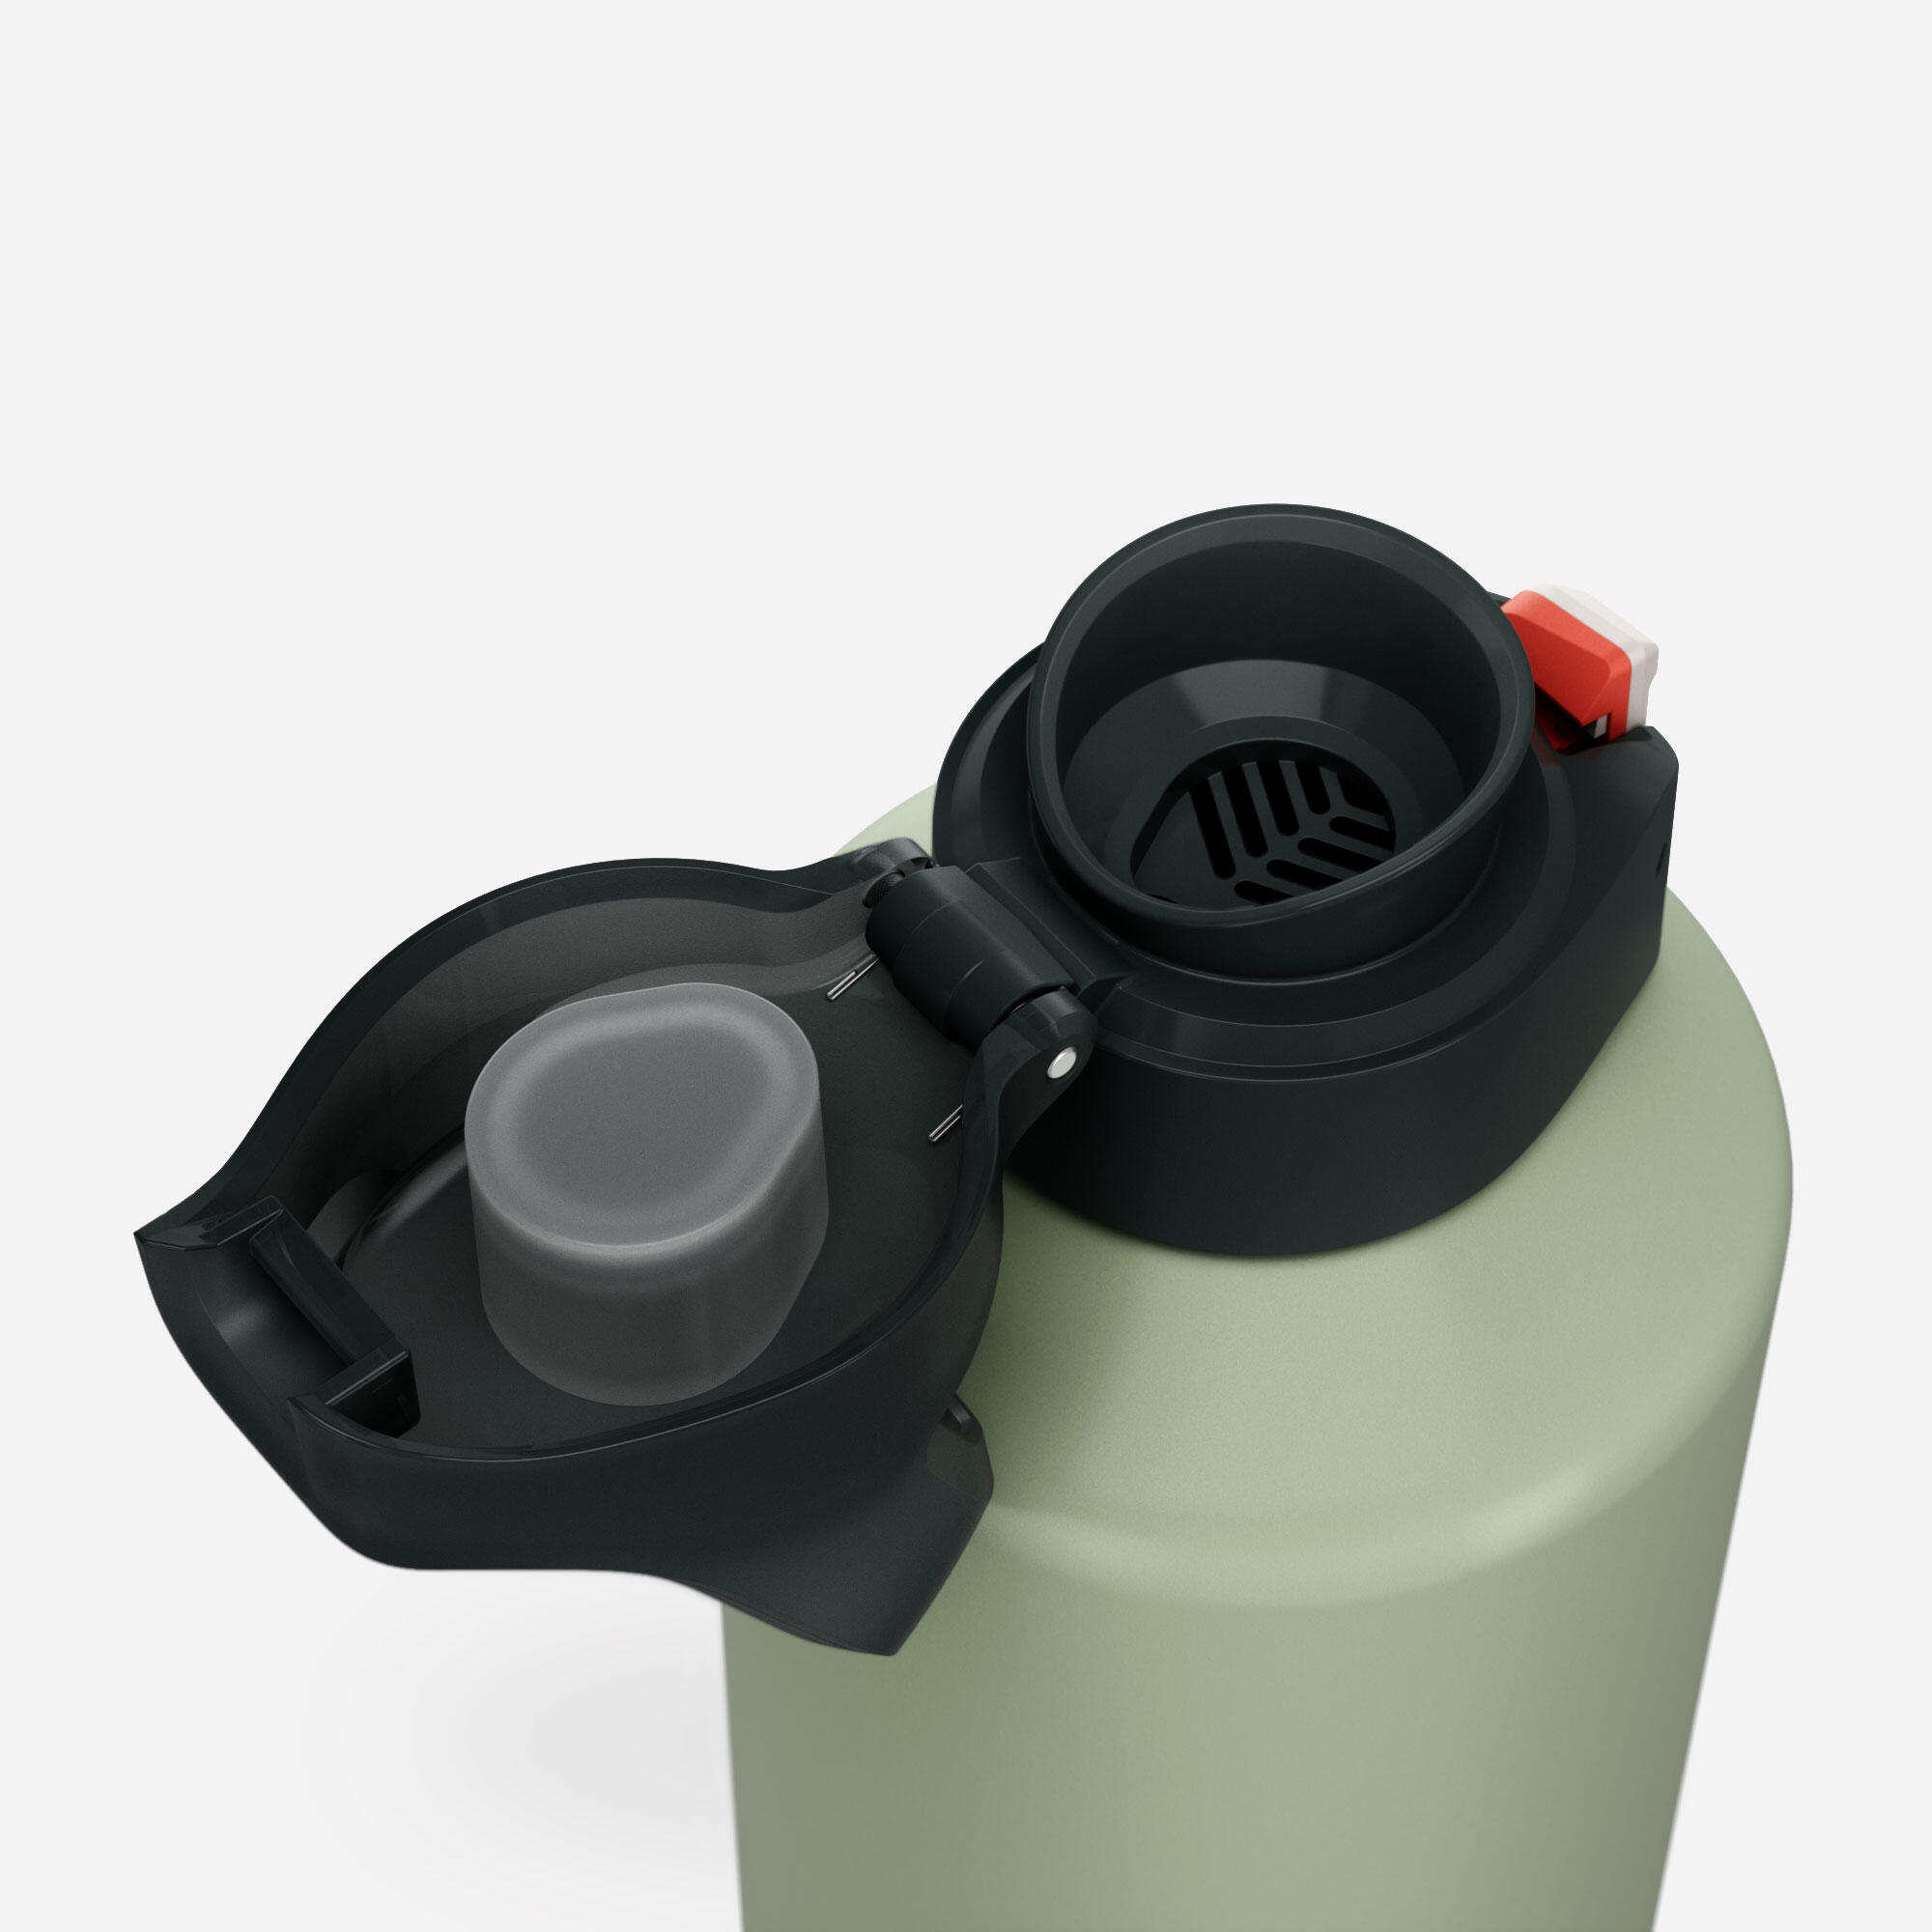 1.5L aluminium flask with quick-open cap for hiking - Khaki 8/12